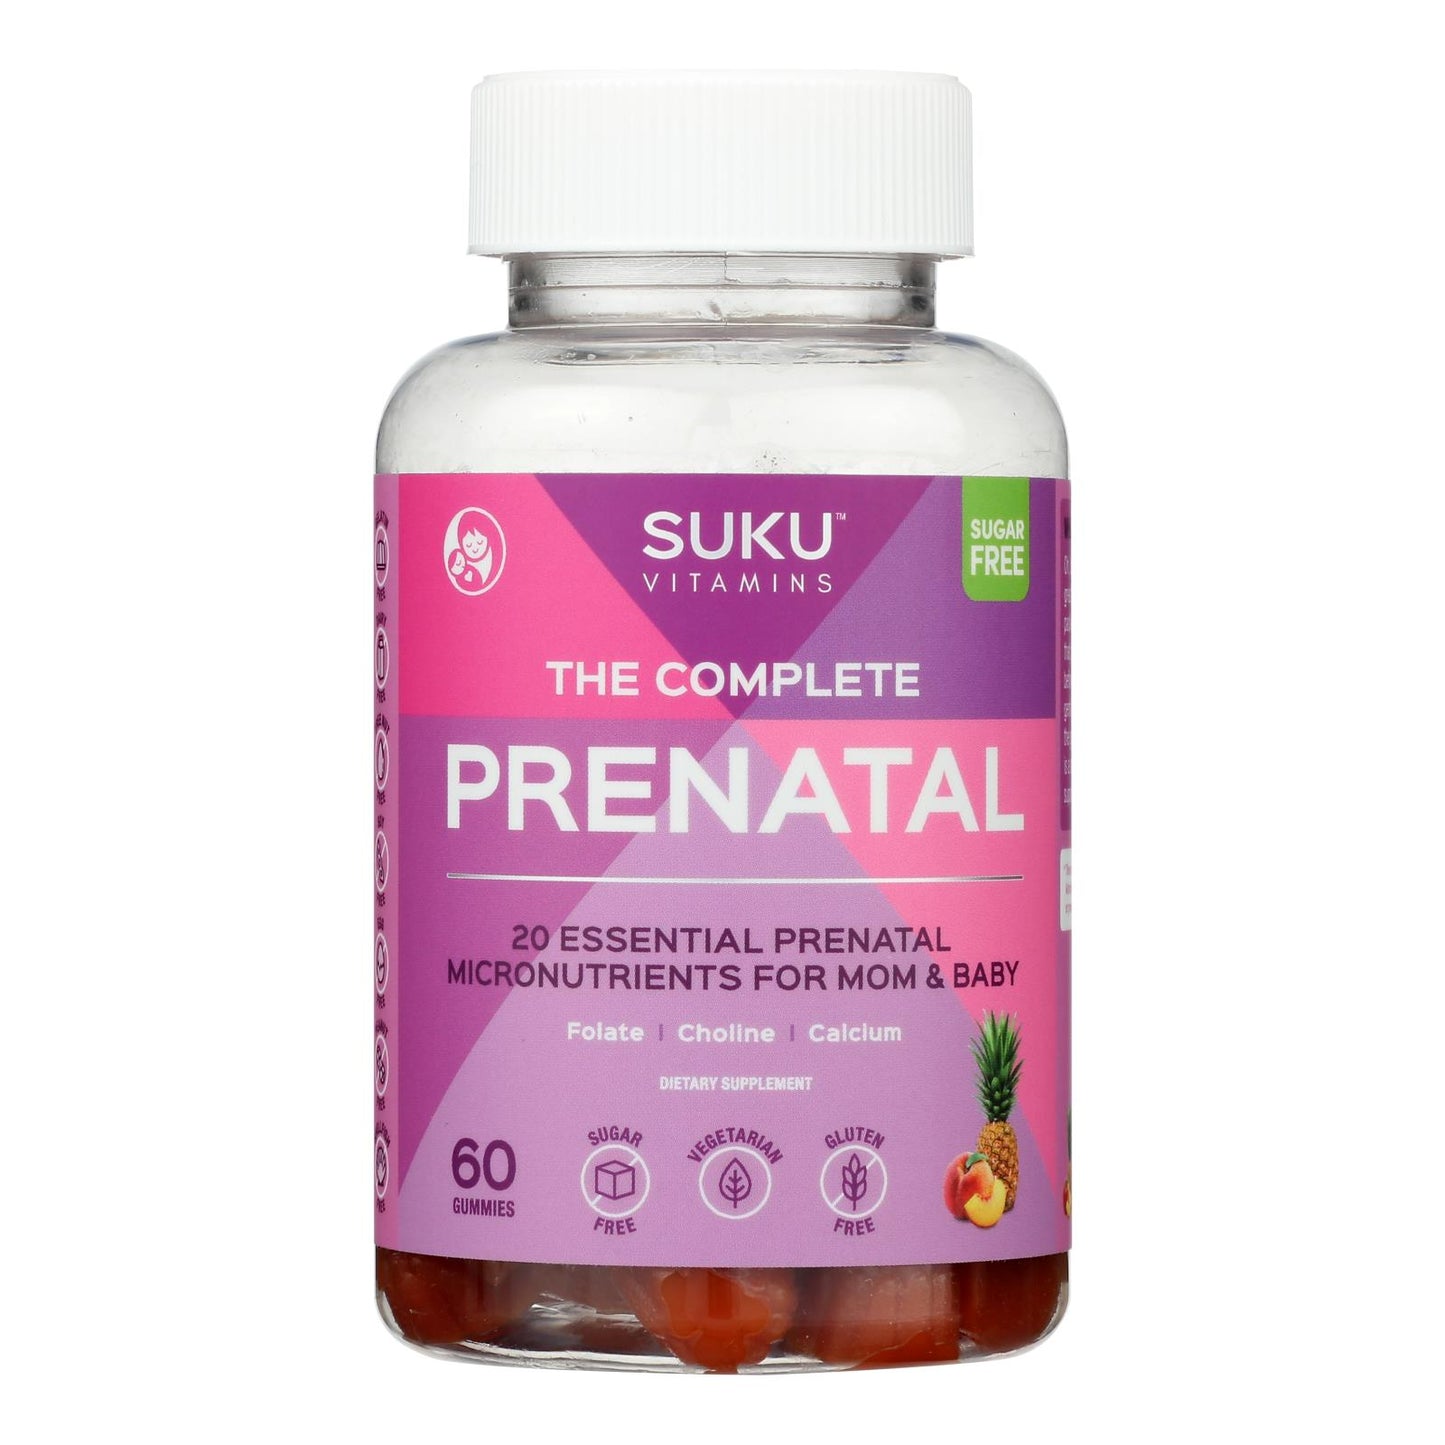 Suku Vitamins The Complete Prenatal Gummy, 60 ct